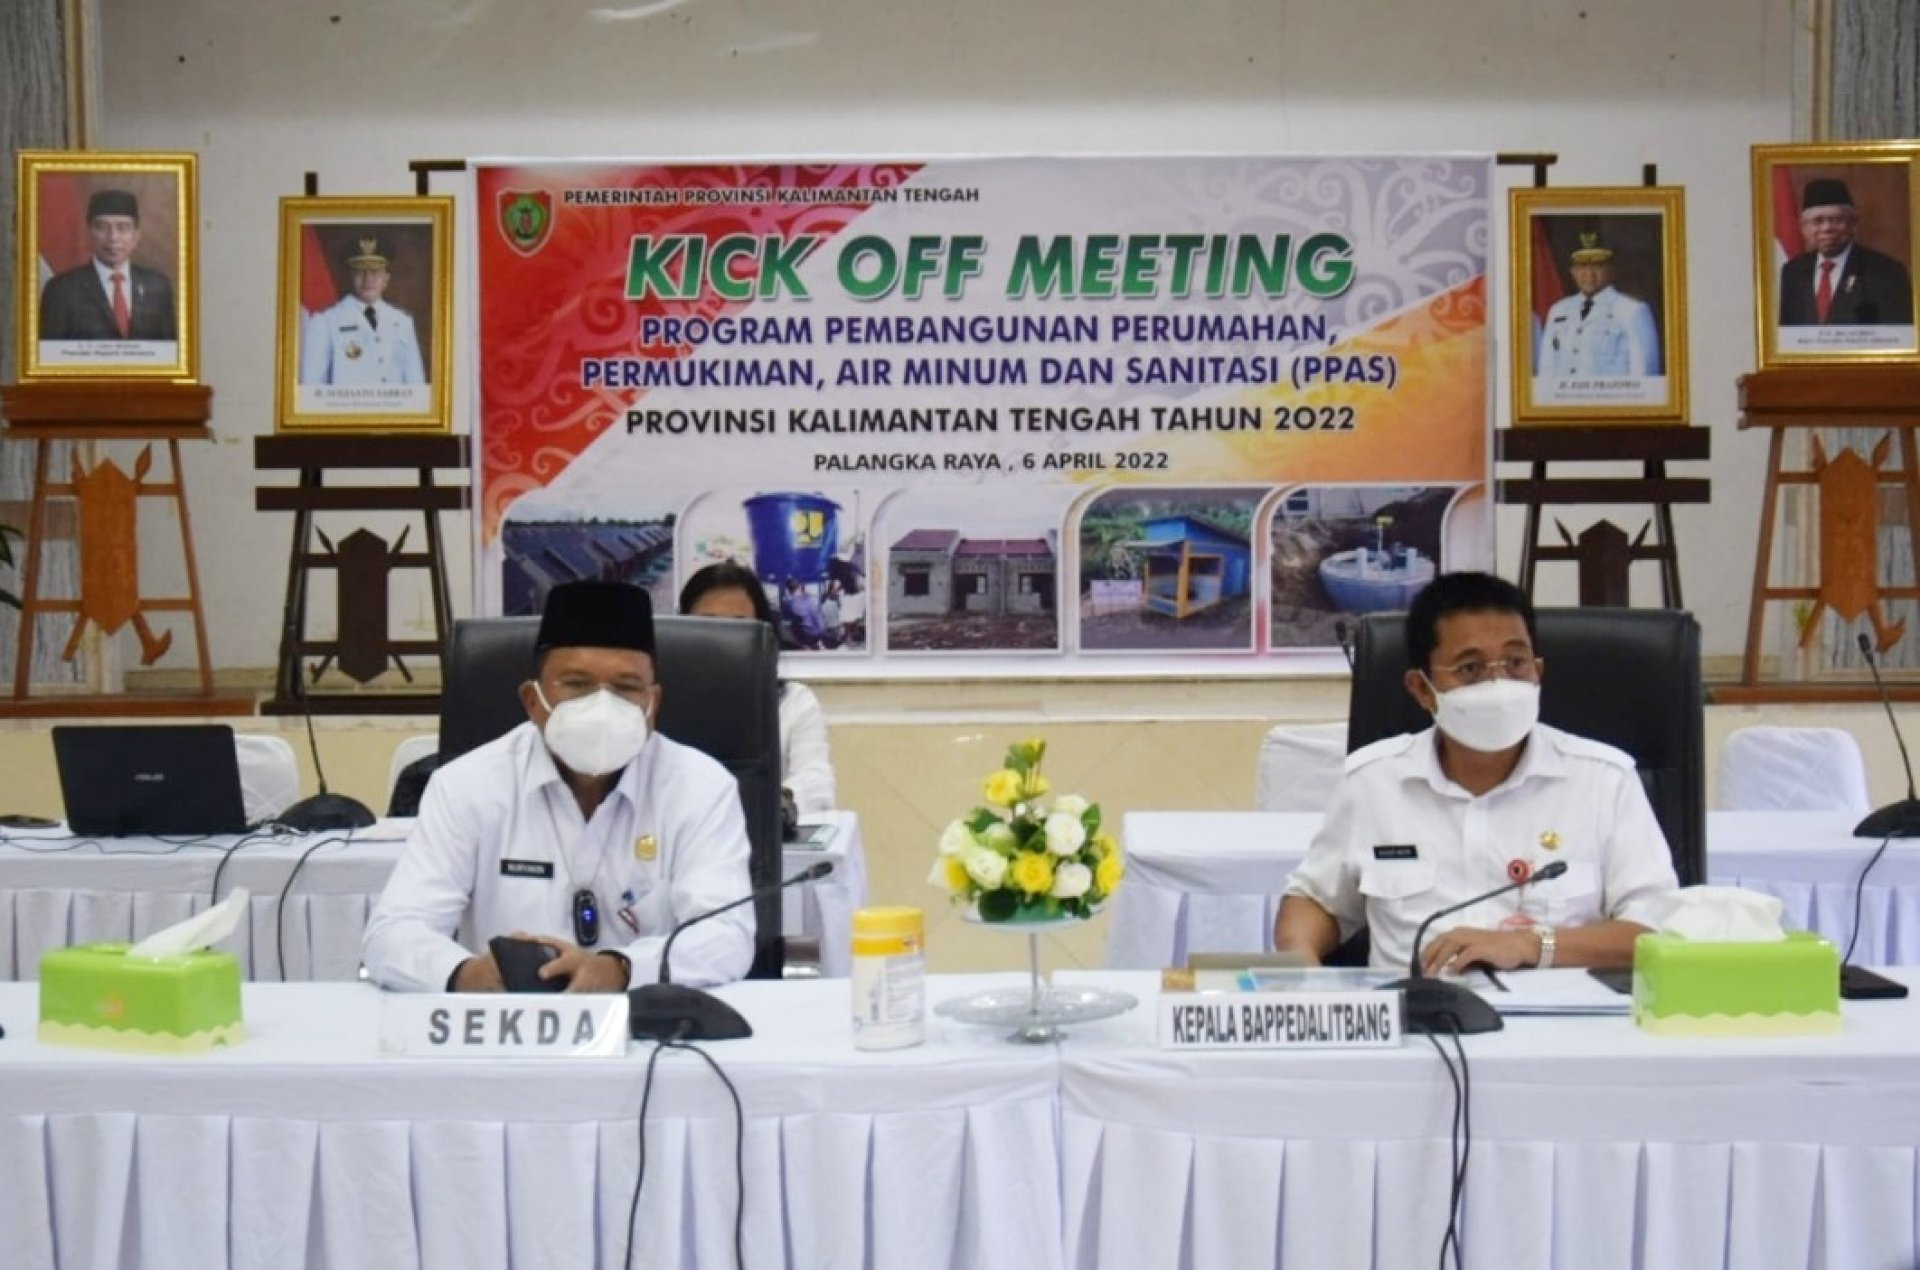 Pj. Sekda Nuryakin Buka Kickoff Meeting Program Pembangunan Perumahan, Permukiman, Air Minum, dan Sanitasi Kalteng Tahun 2022